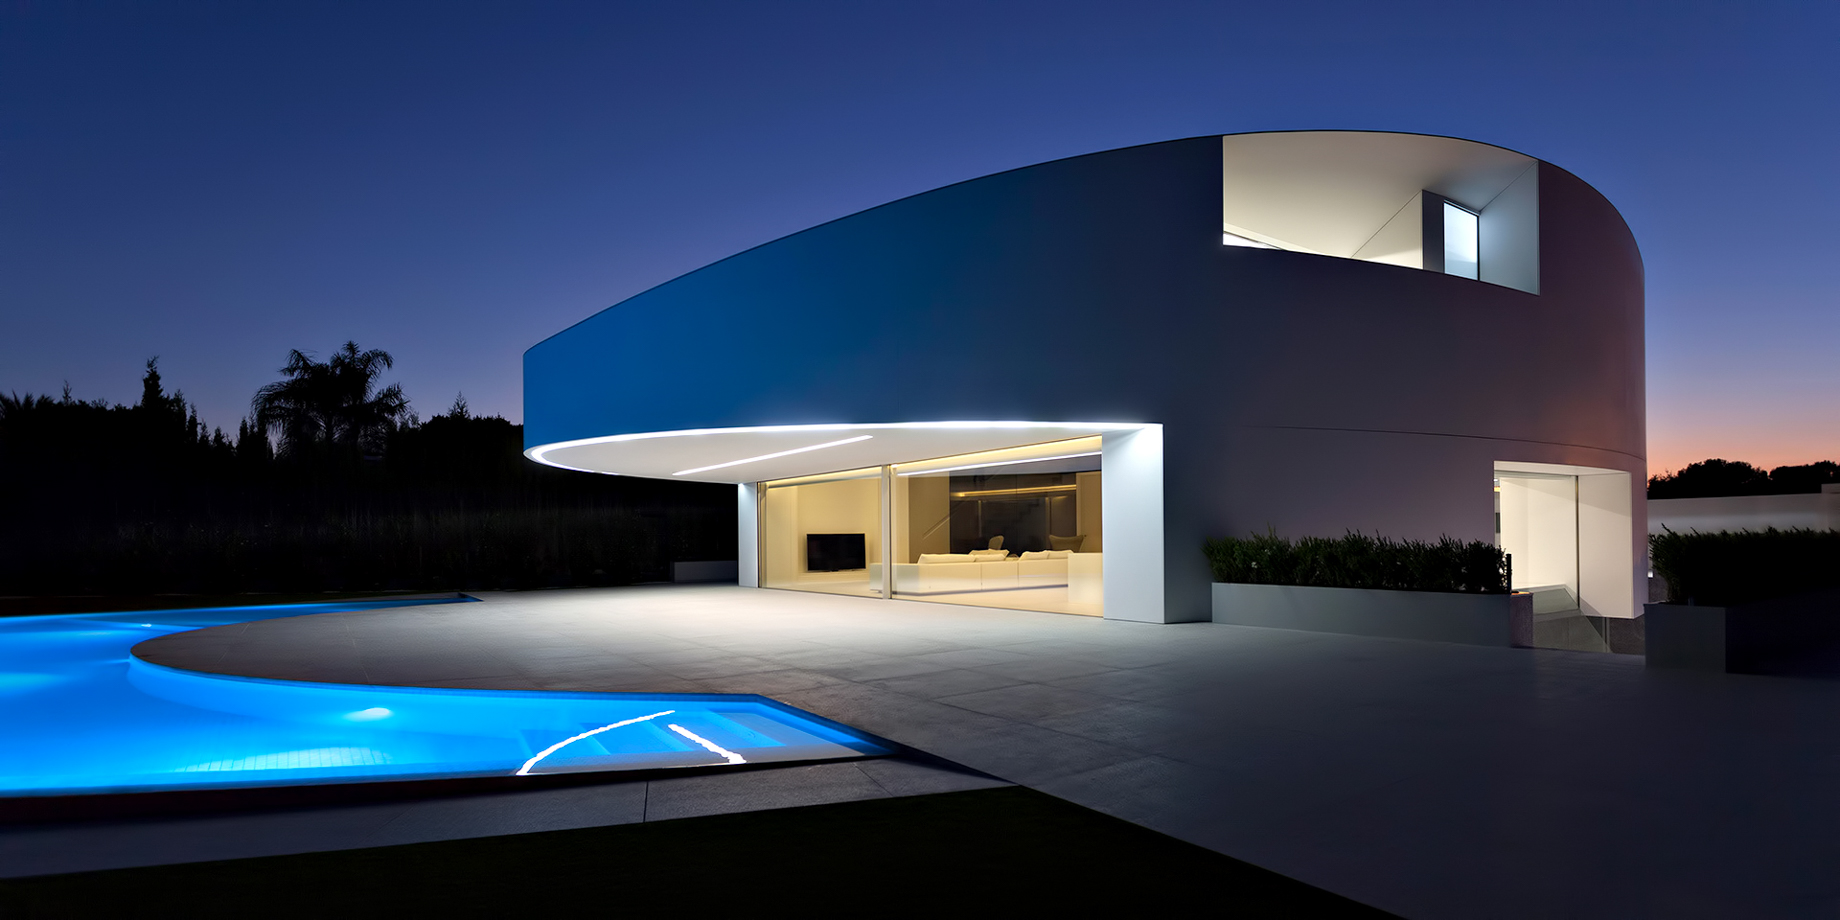 Casa Balint Luxury Residence - Bétera, València, Spain